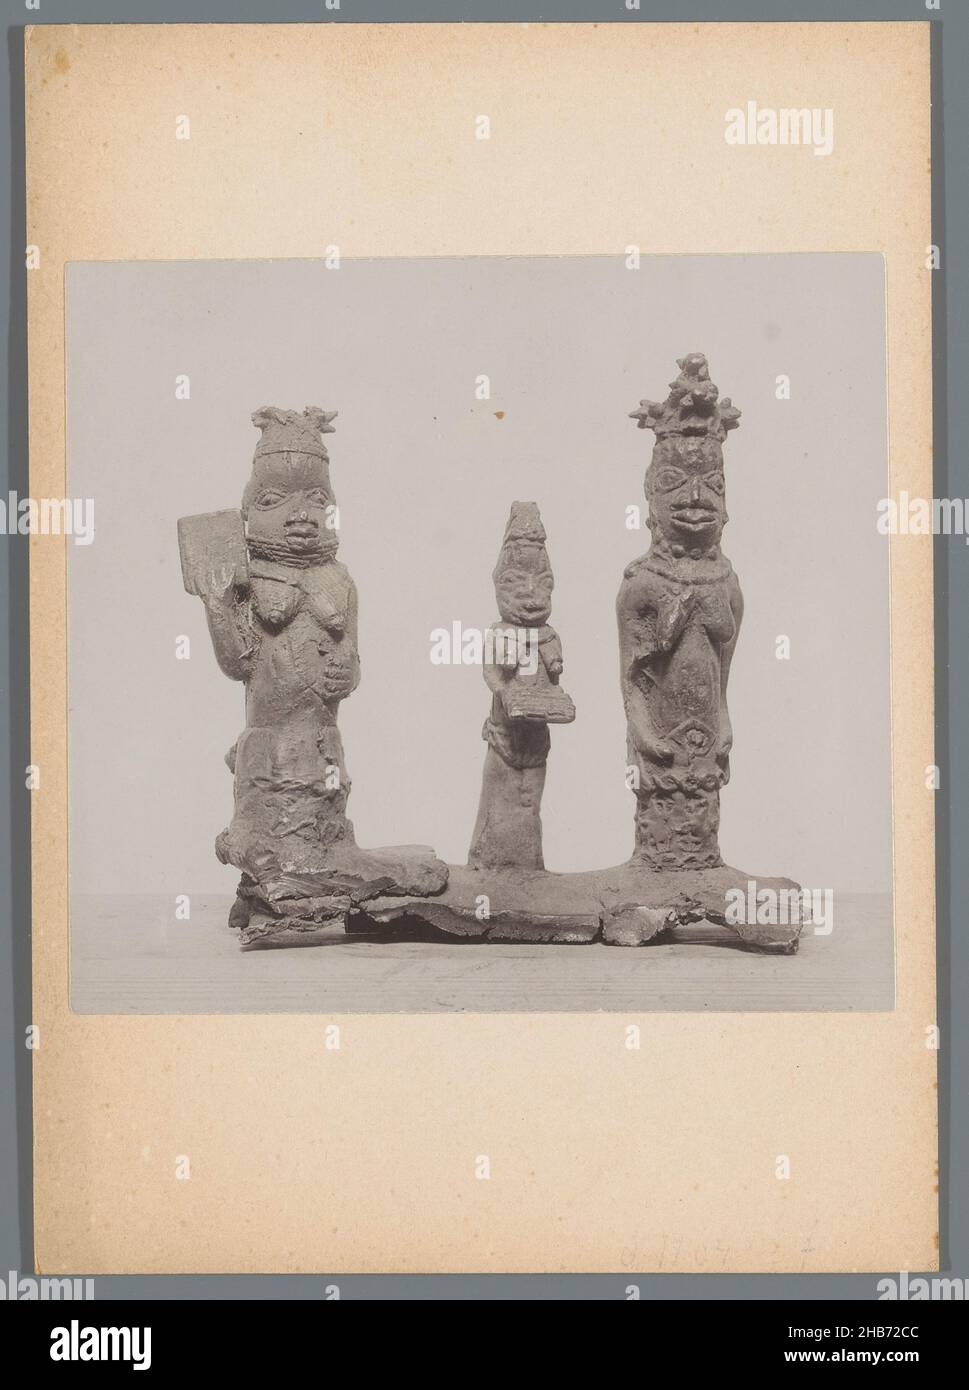 Tres estatuas de bronce en un pedestal de Benin, anónimo, 1880 - 1940, papel baryta, cartón, altura 174 mm x anchura 130 mm Foto de stock